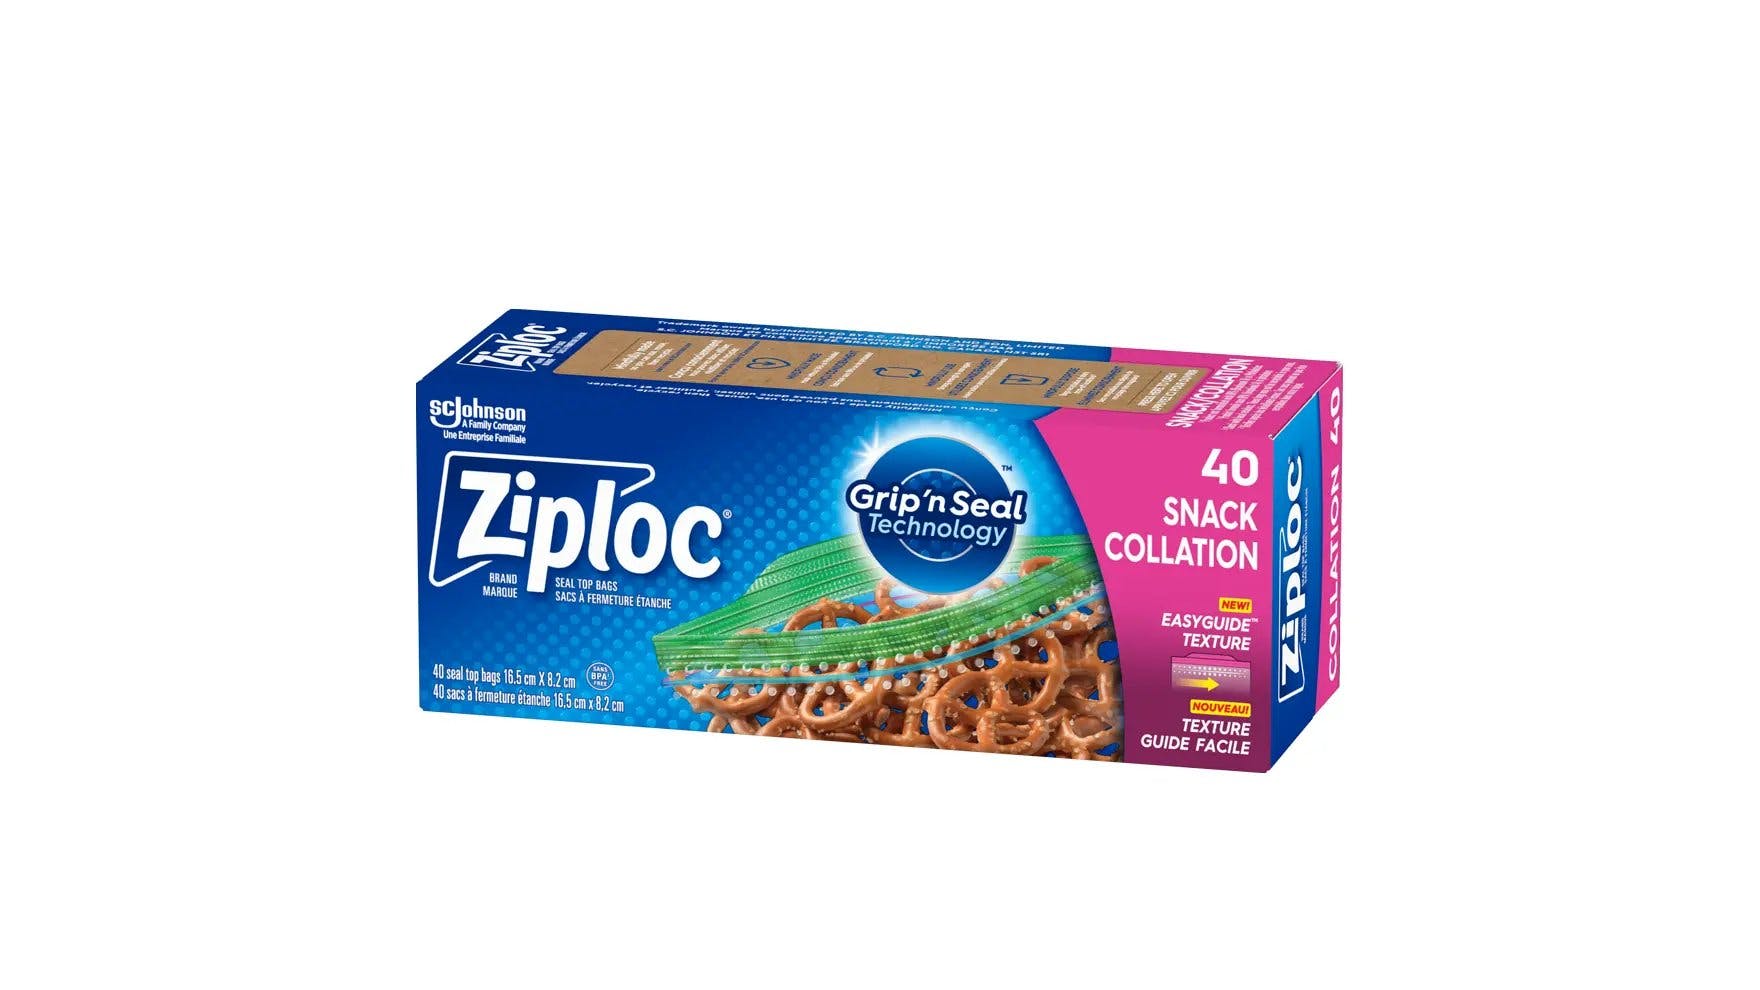 Angle of Ziploc snack bags box